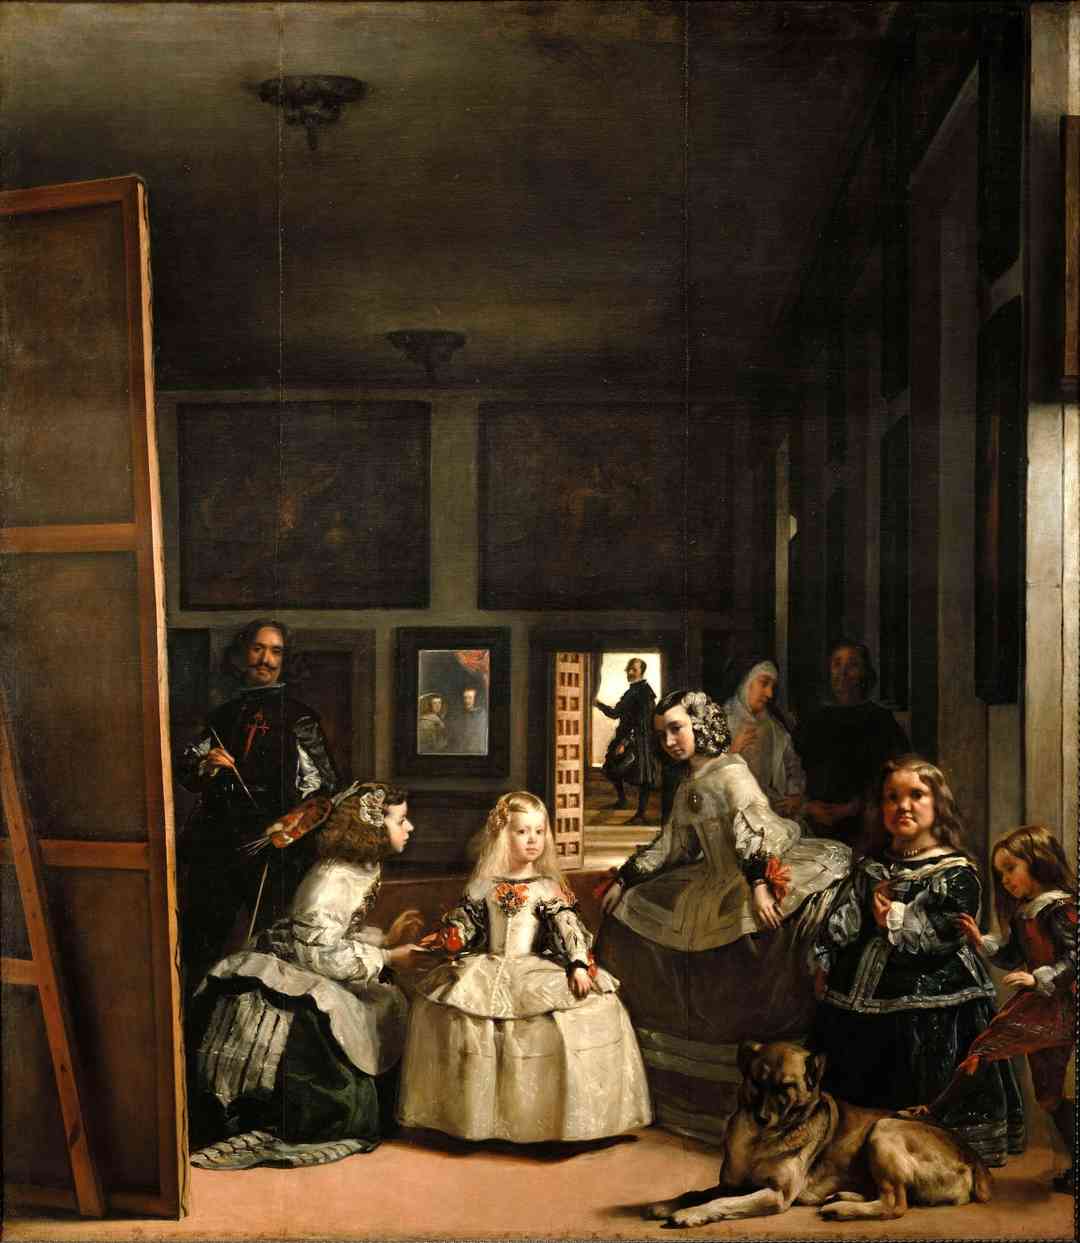 Las Meninas, Diego Velázquez,1656